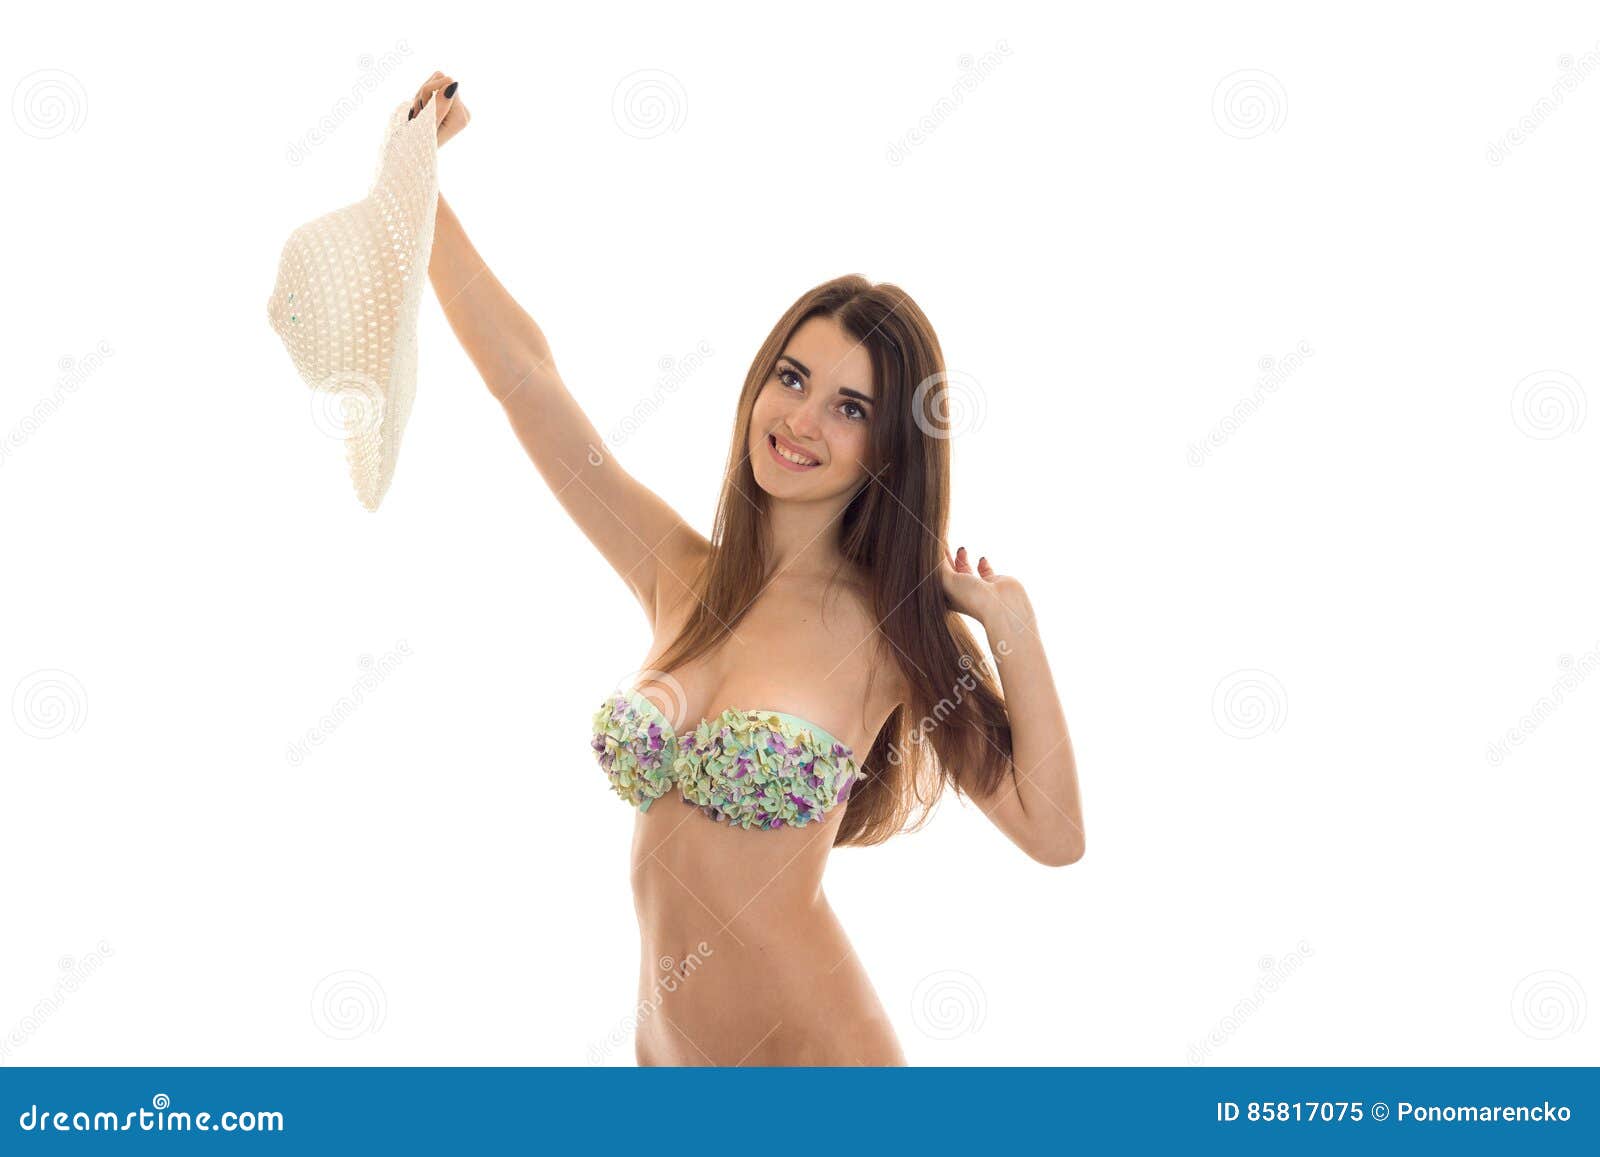 citlallin lara share slim women with big boobs photos